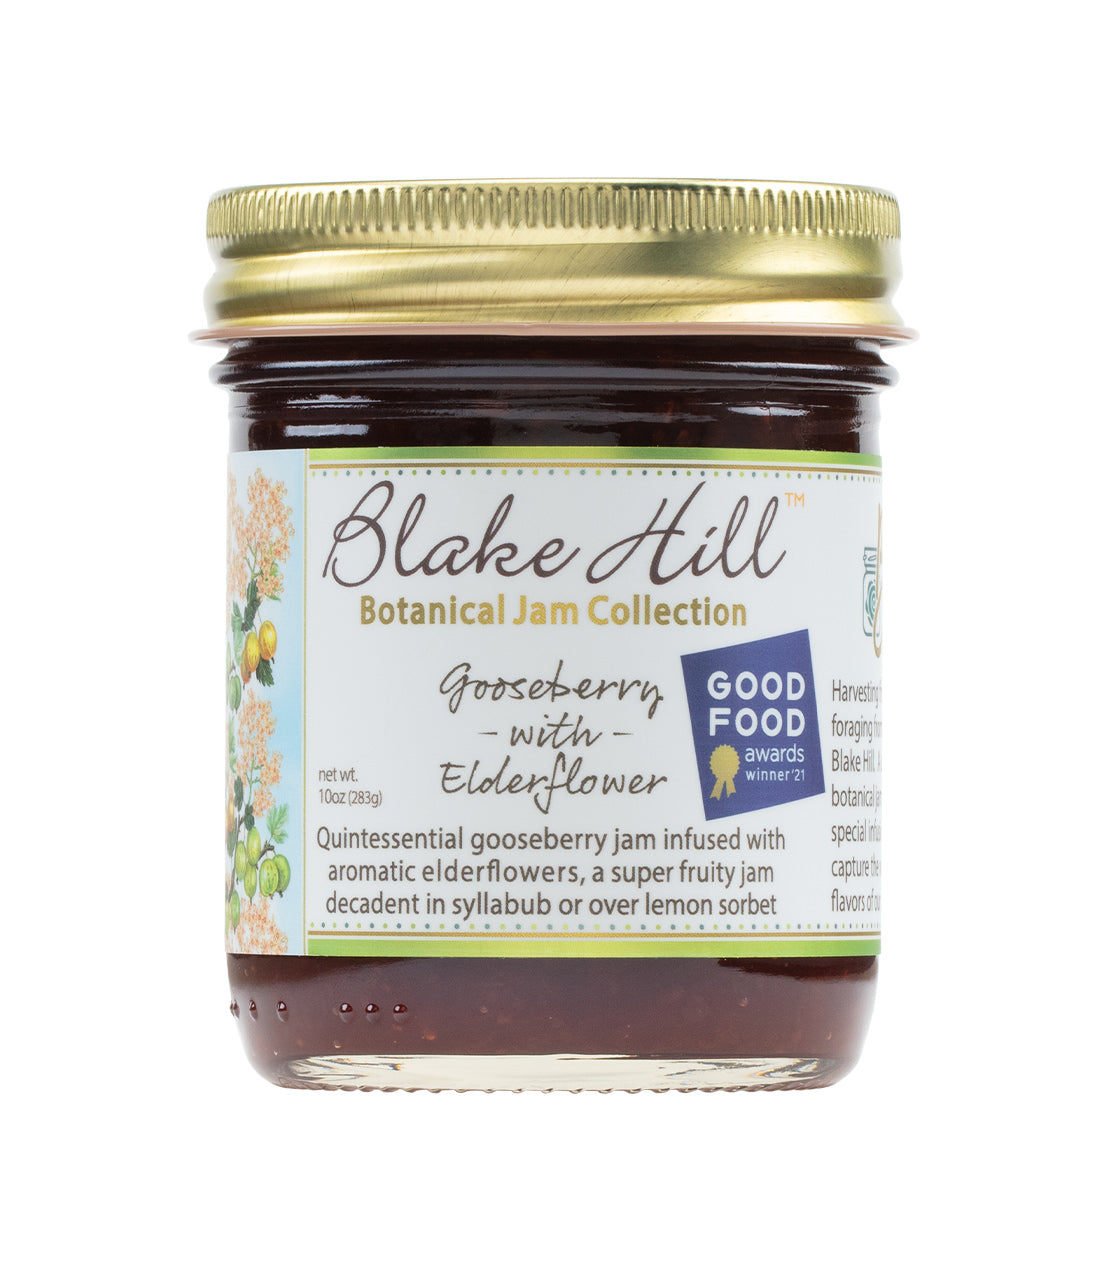 Blake Hill Marmalade (Assorted Flavors) - 10 oz. Jar Gooseberry with Elderflower - Harney & Sons Fine Teas